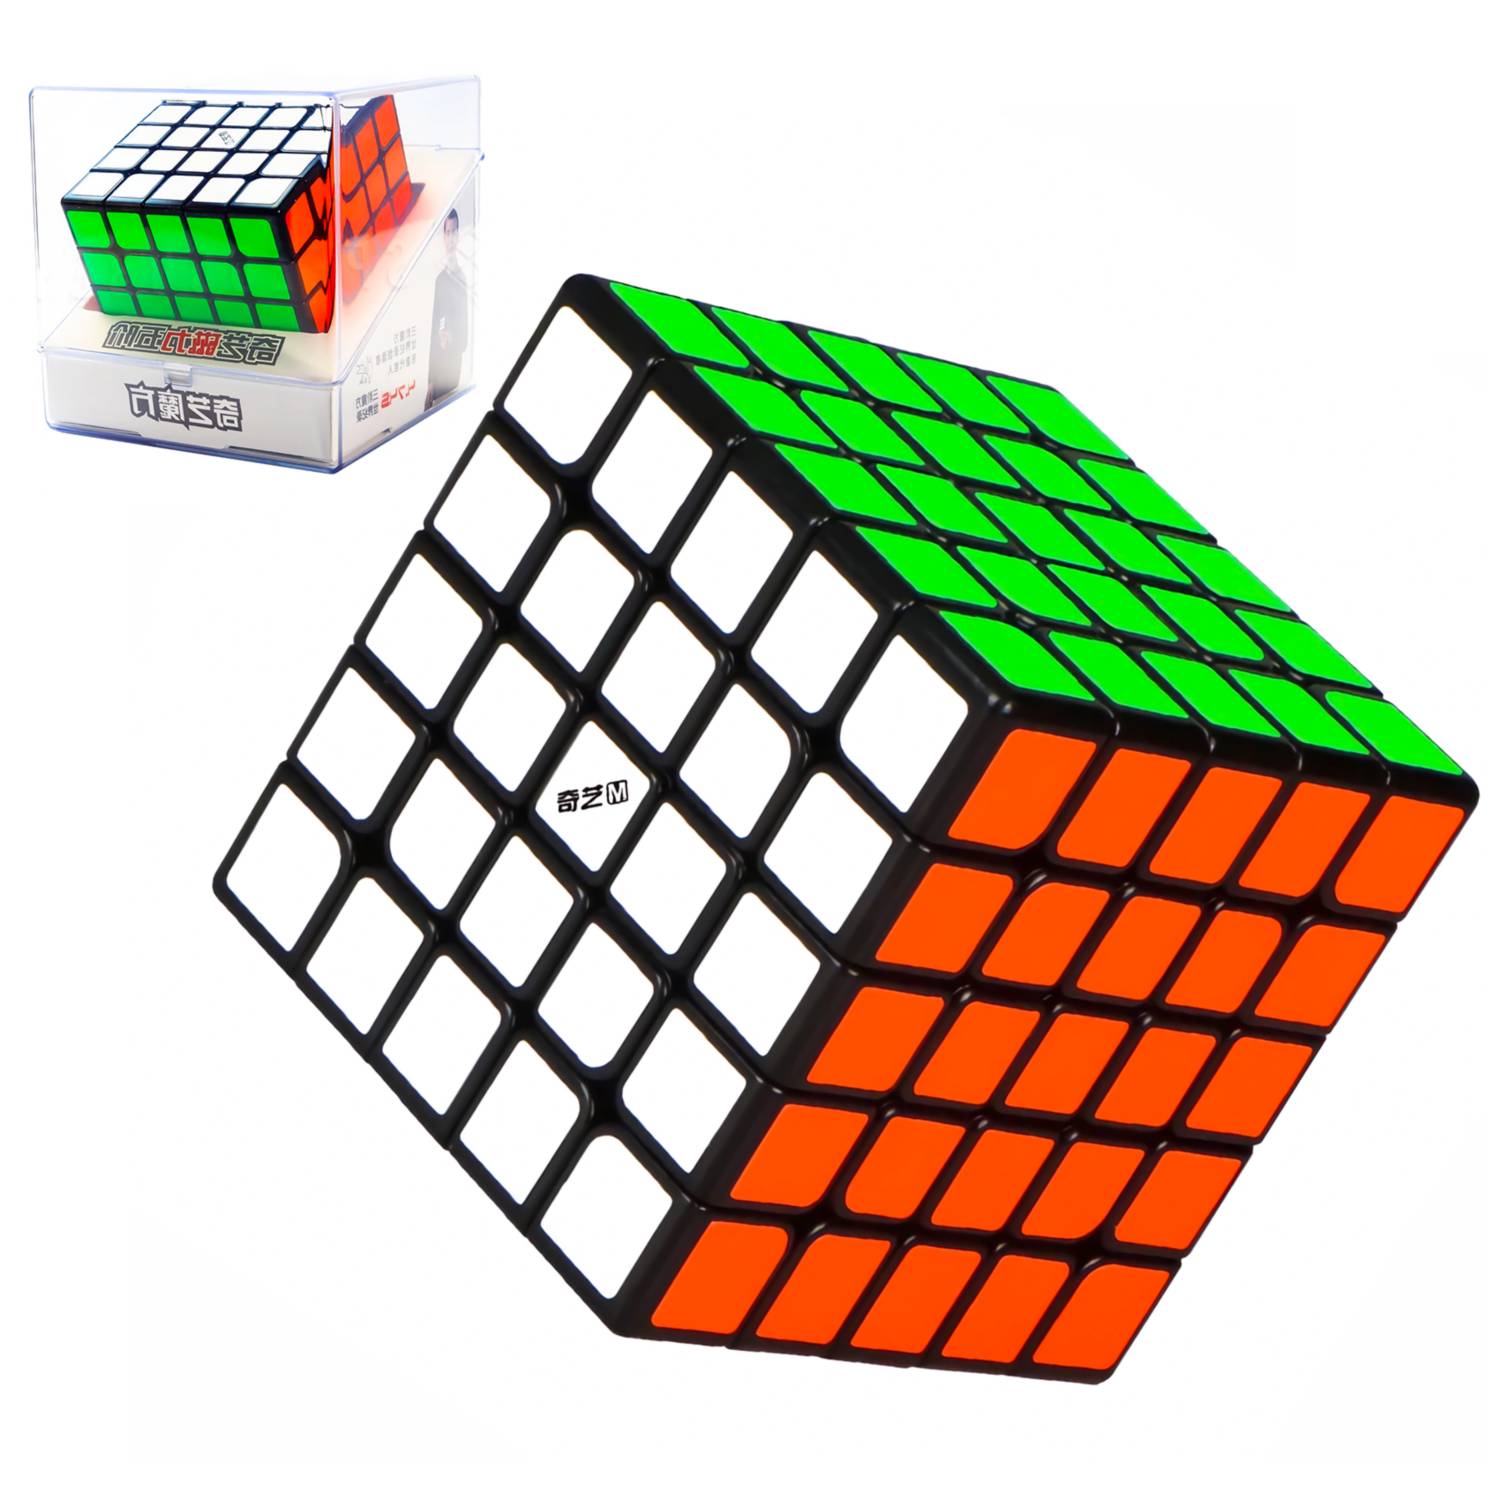 Cubo De Rubik 5x5 Cubo Magico Rubik 5x5 Ms Magnetico Velocidad Qiyi Estuche QIYI |  falabella.com